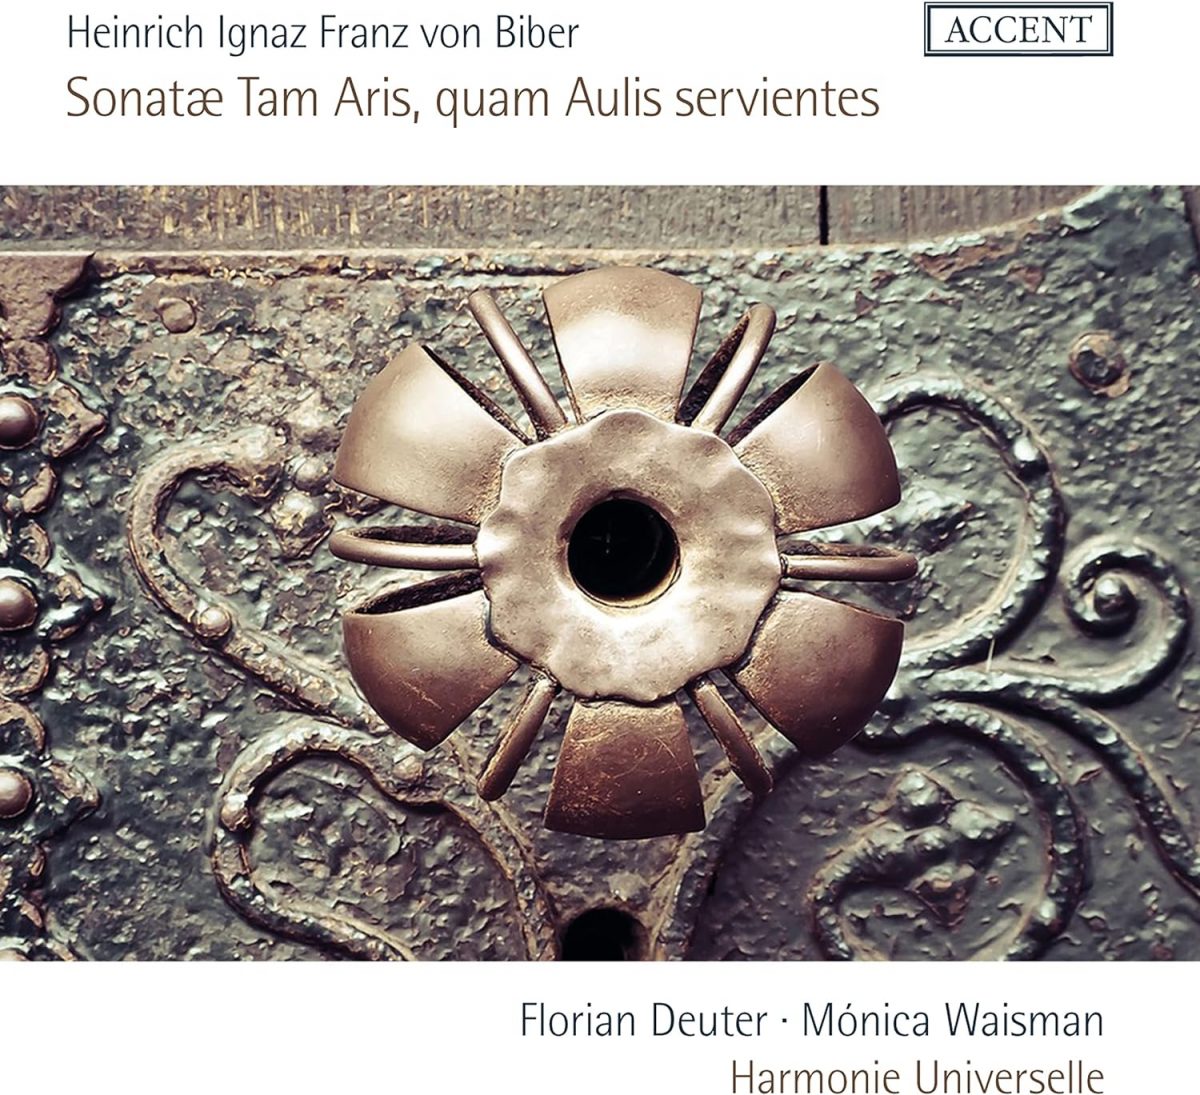 CD cover Biber Sonatae tam aris Harmonie universelle